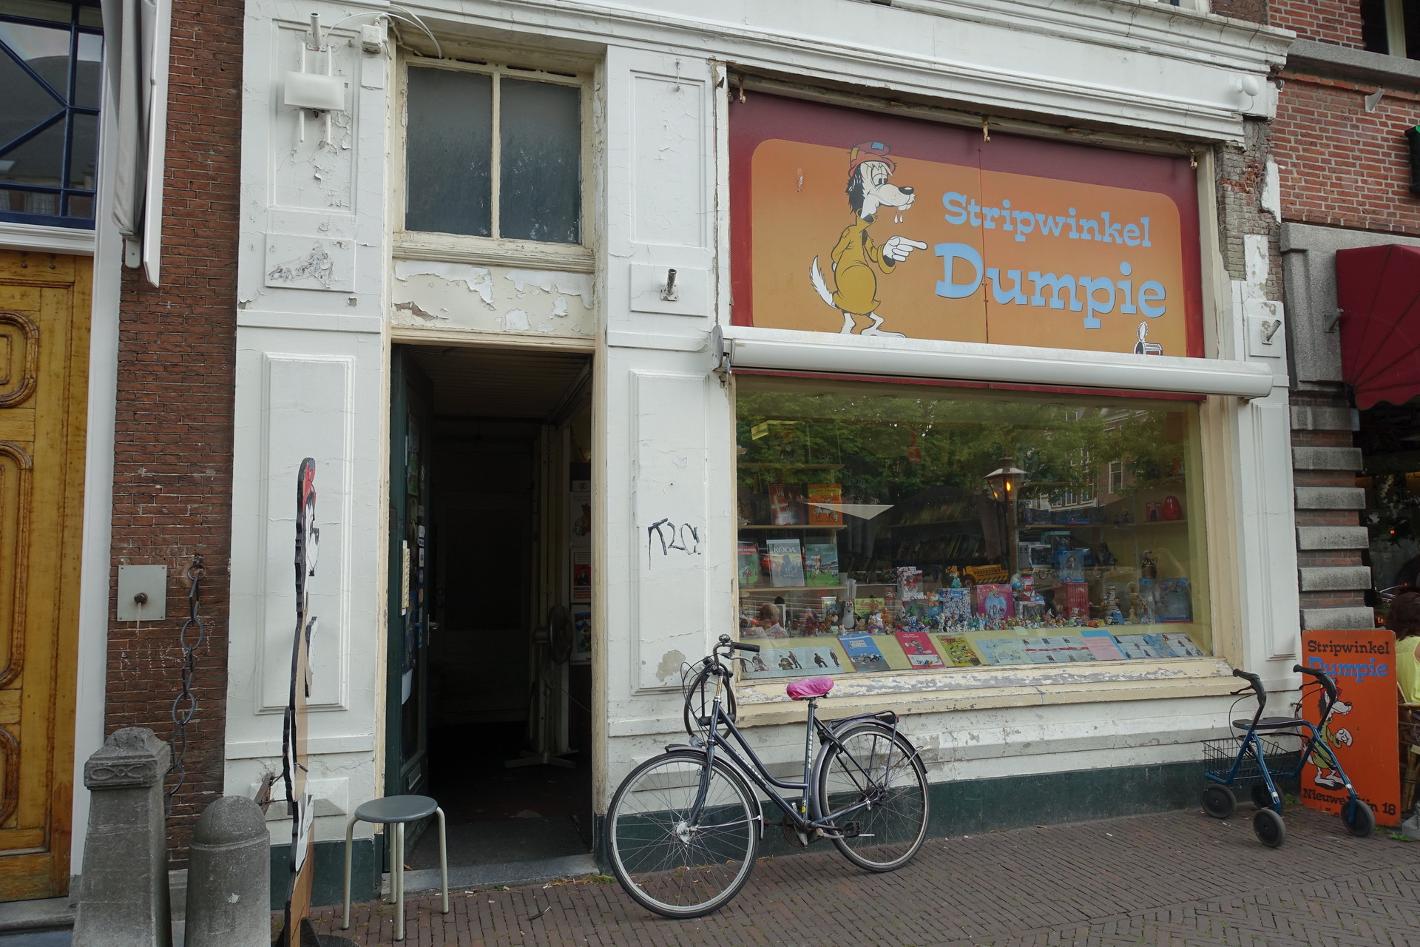 Foto Stripwinkel Dumpie in Leiden, Winkelen, Hobby & vrije tijd - #1